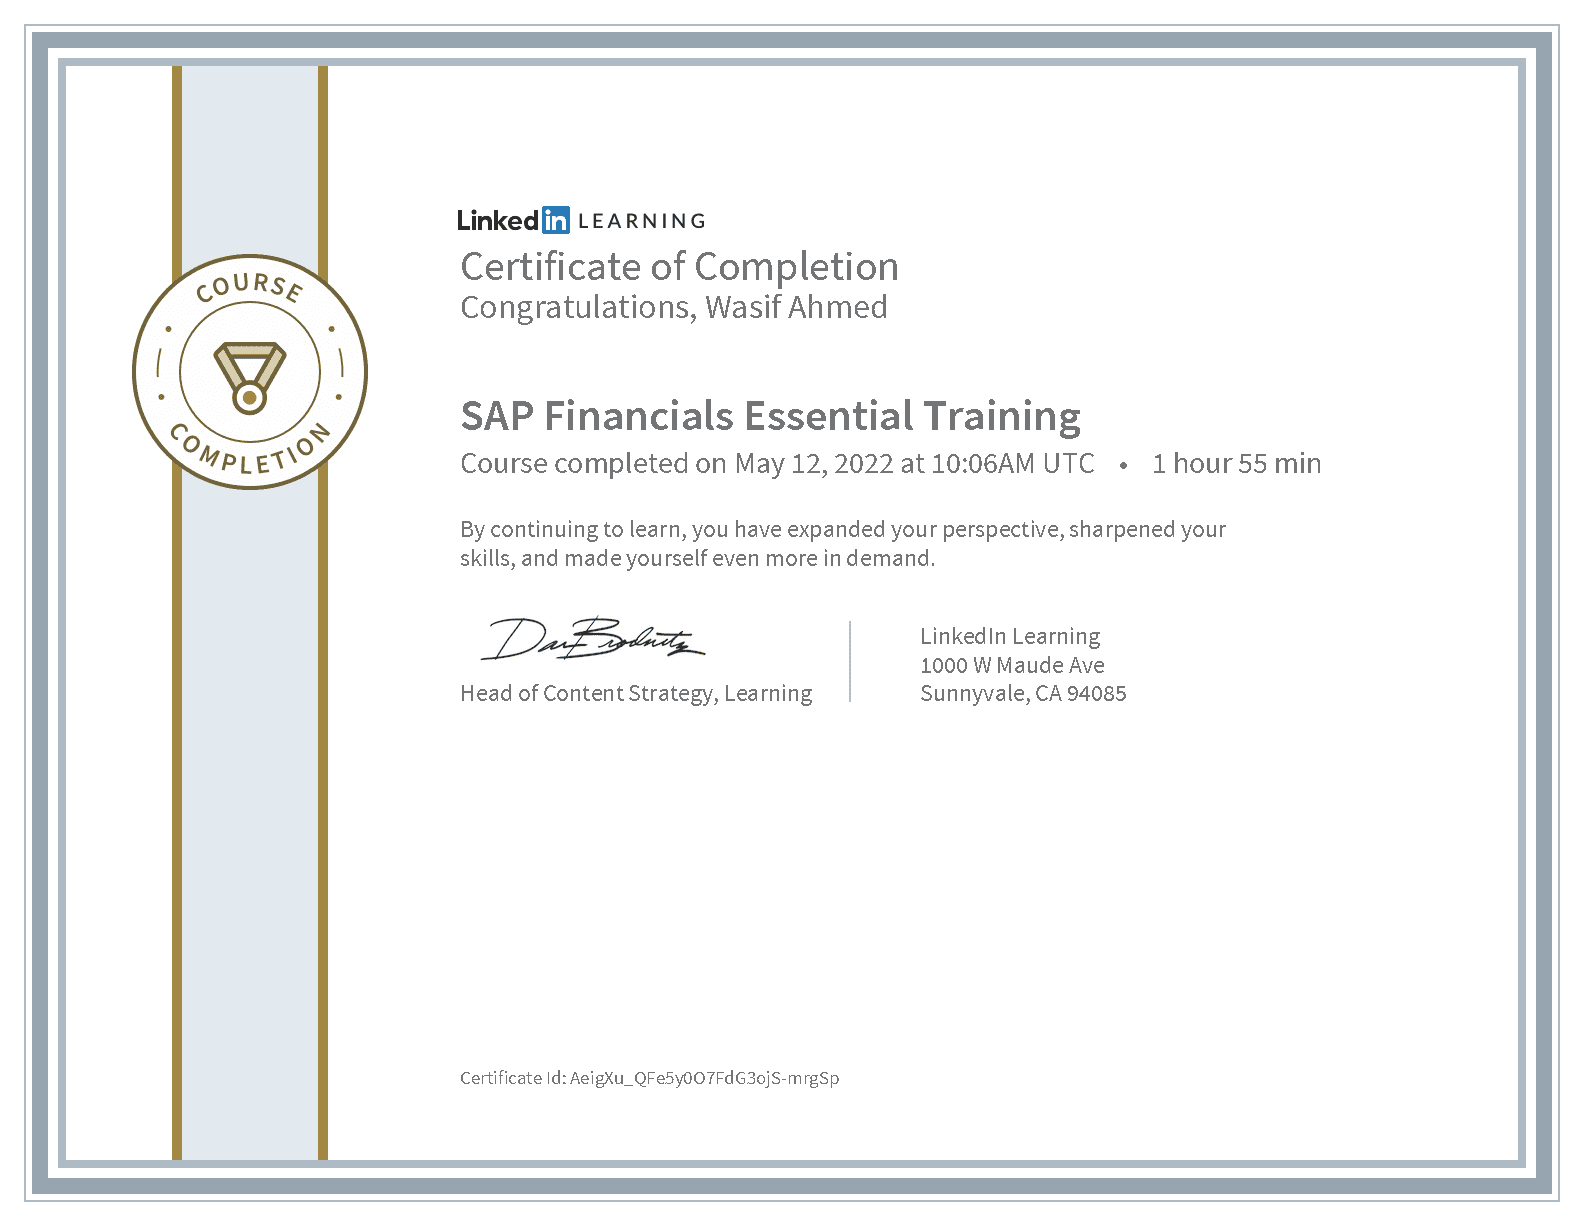 SAP Financials Essential Training